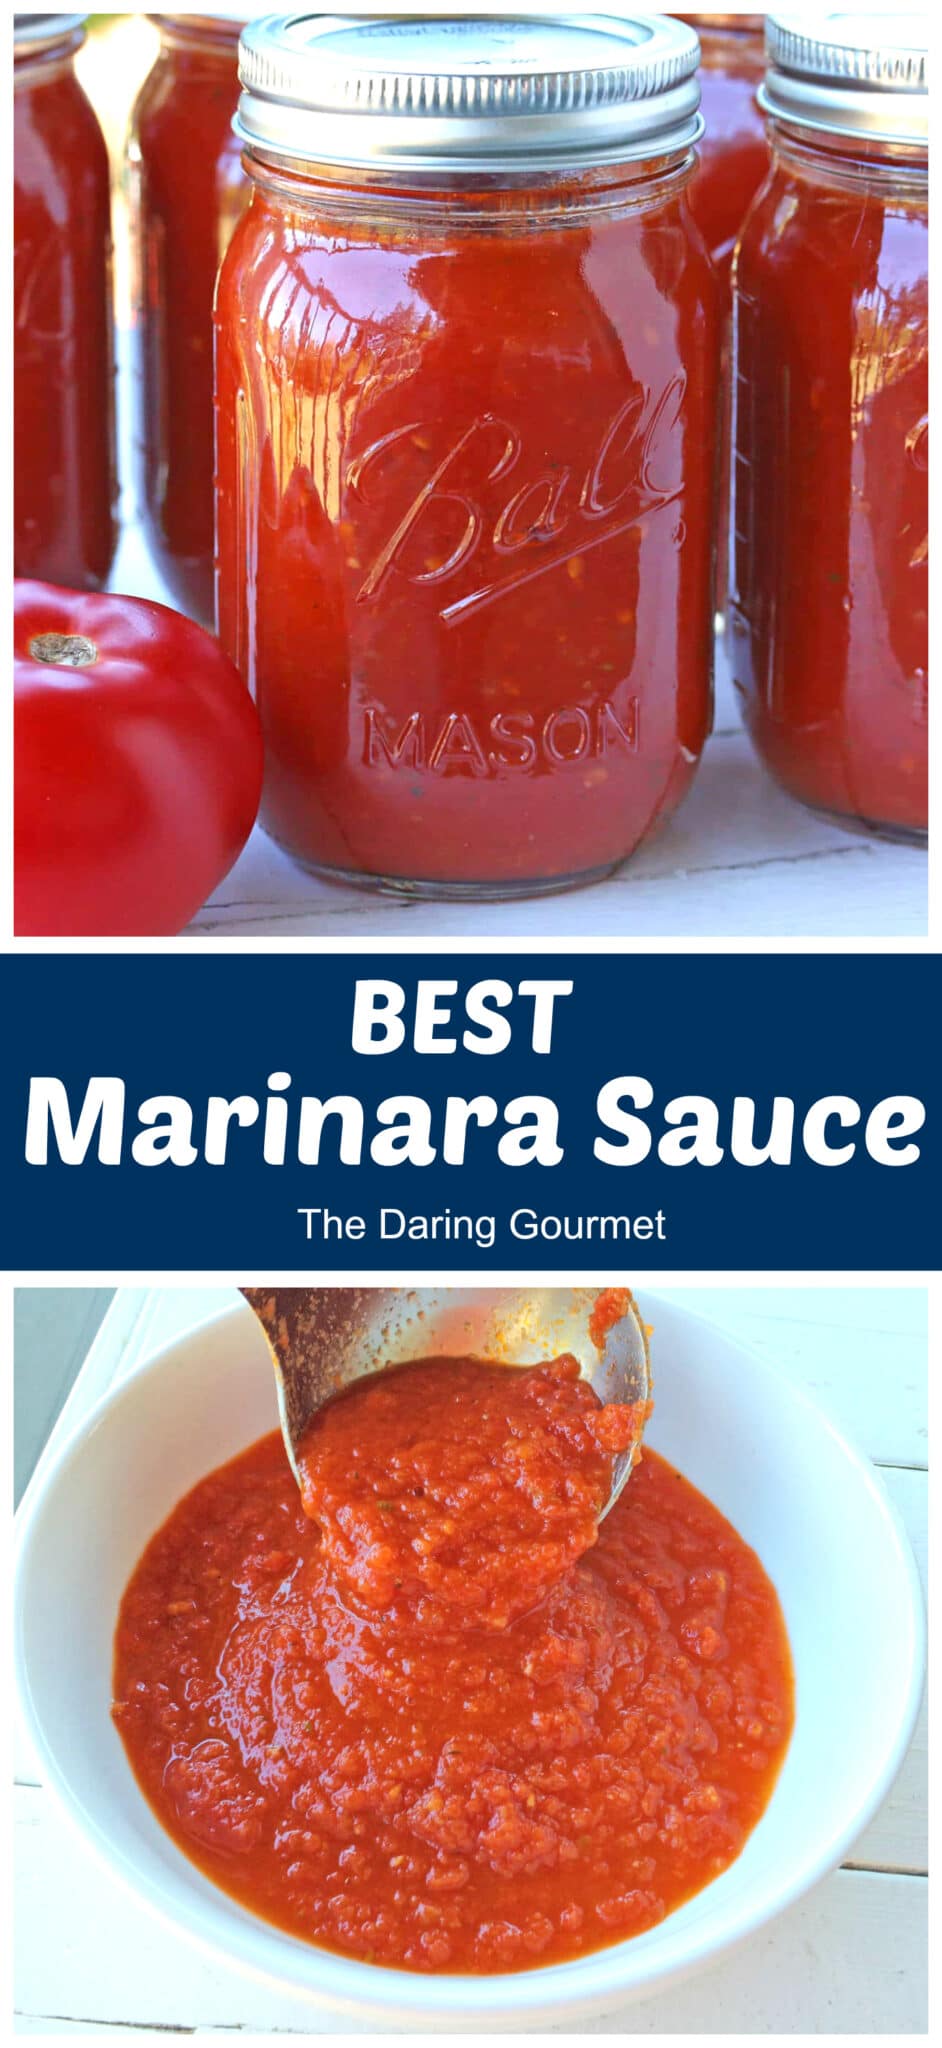 marinara sauce recipe for canning best homemade tomato sauce